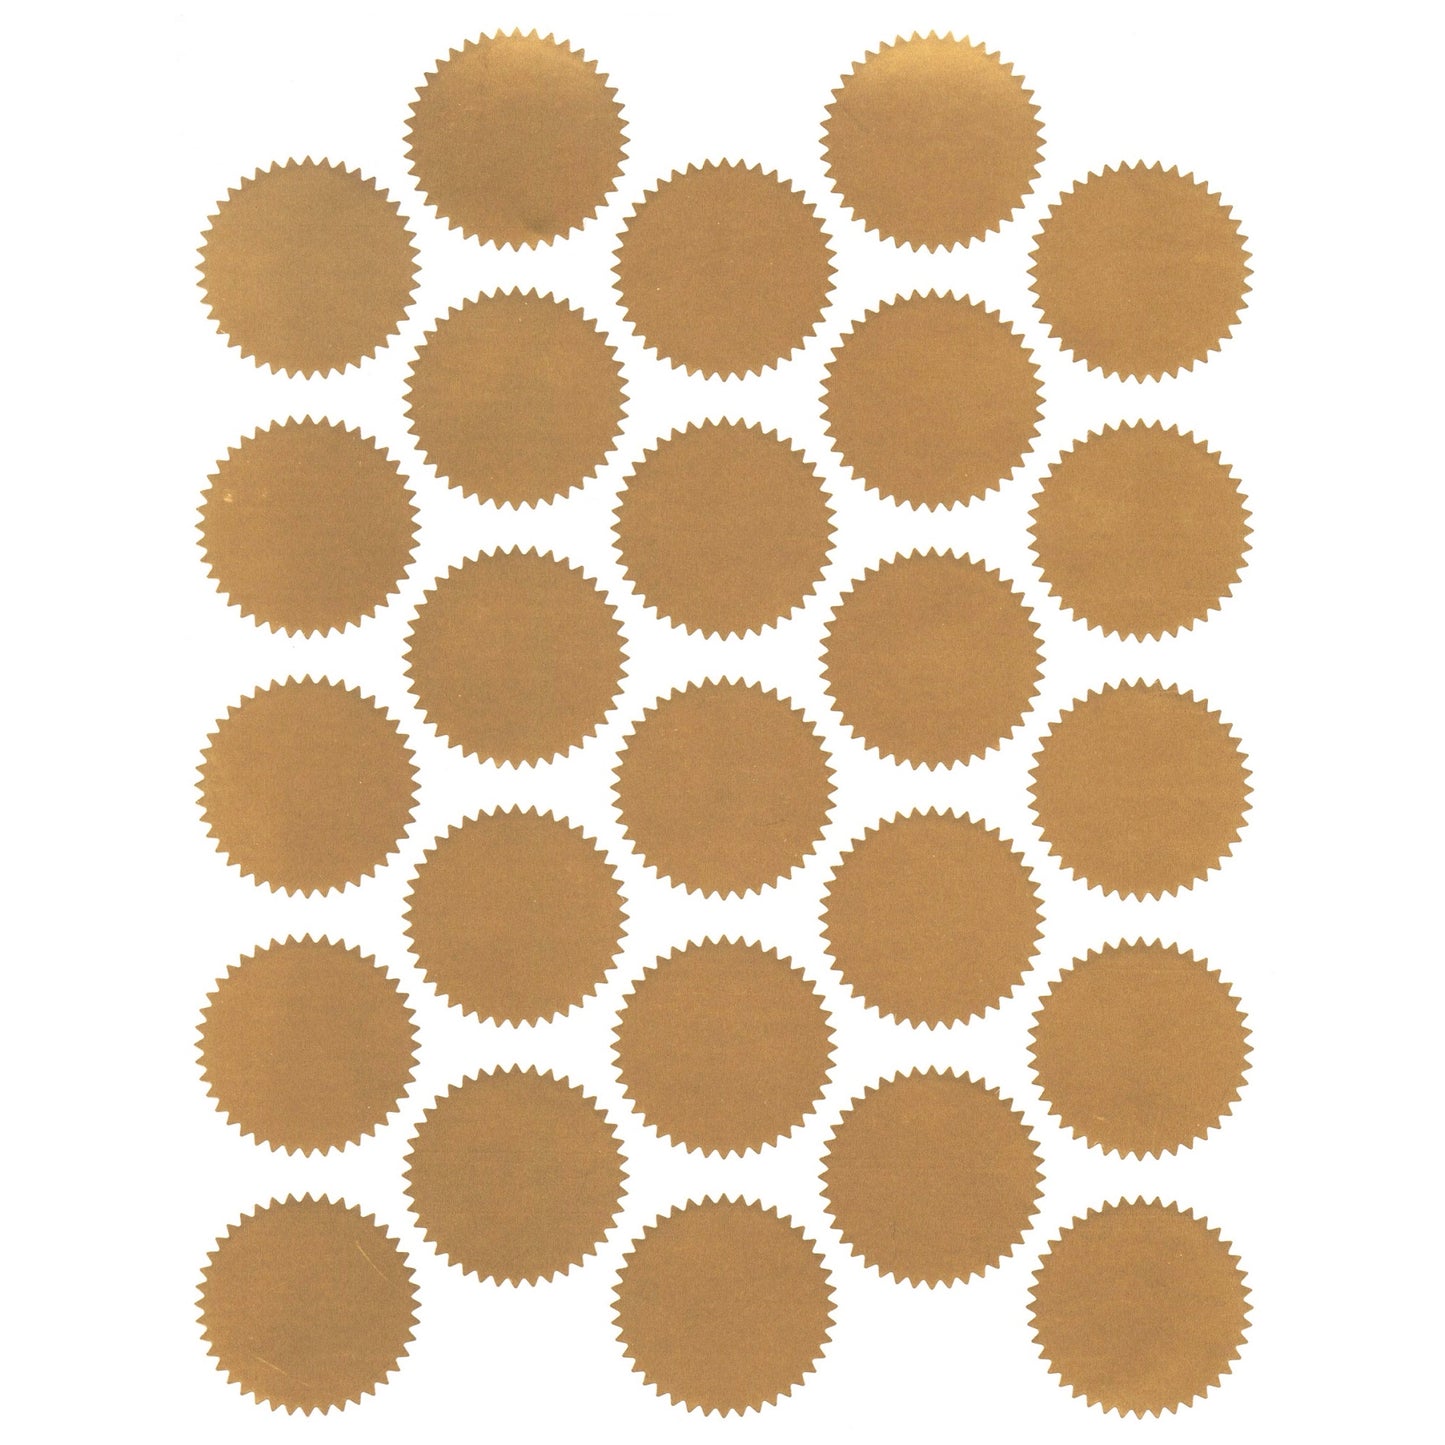 St. James® Imprintable Seals, Metallic Gold, 25/sheet, Pack of 8 (200 Seals)